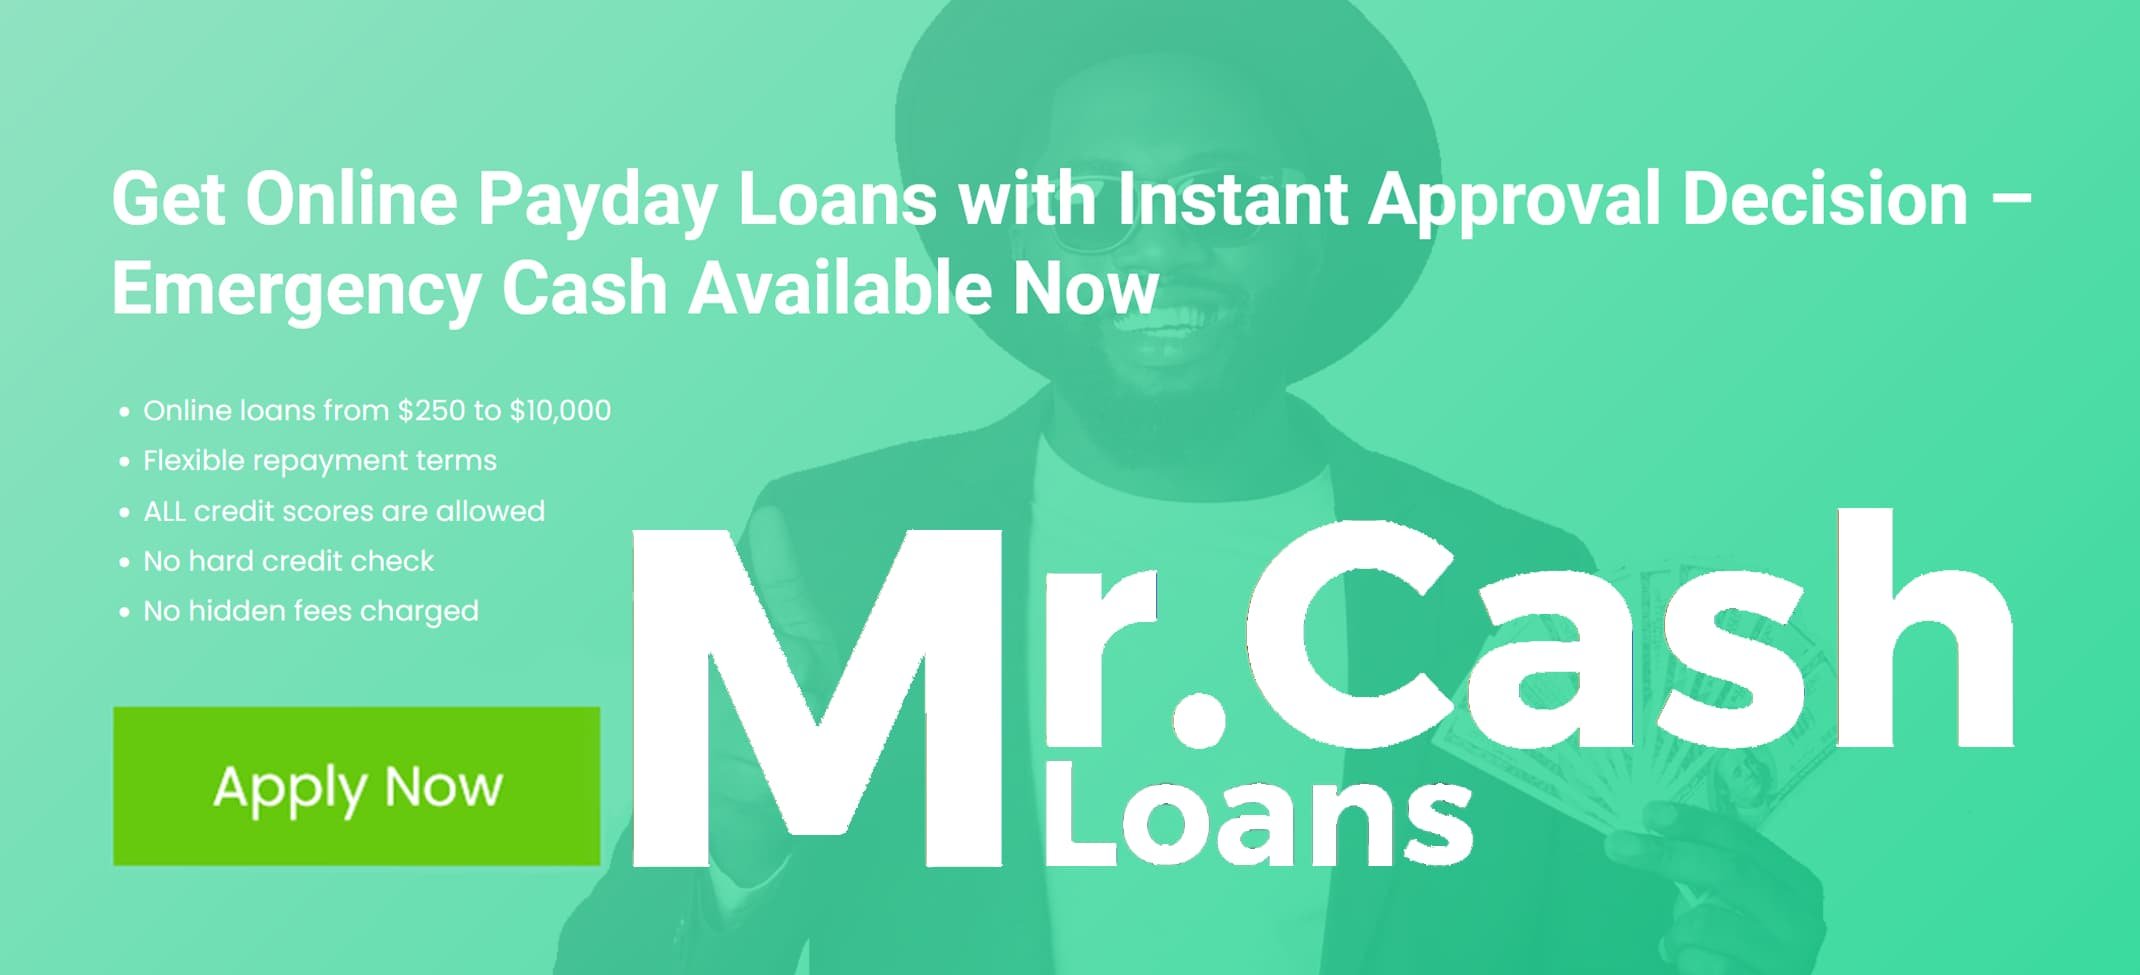 Mr. Cash Loans in Lake Charles, LA 70601 cover